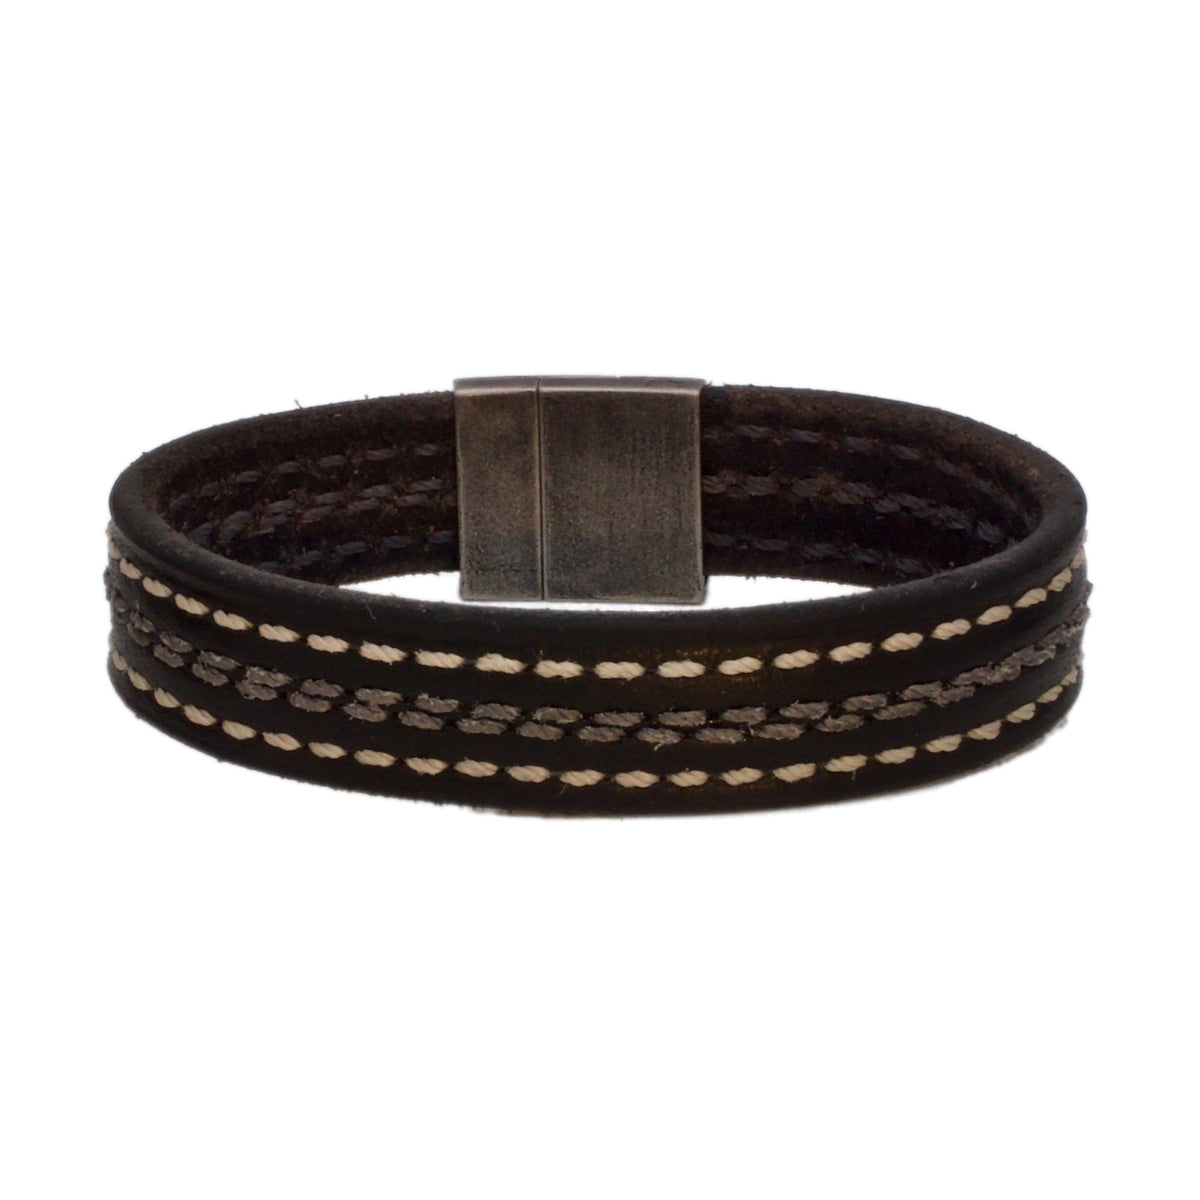 The Remington Bespoke Leather Bracelet